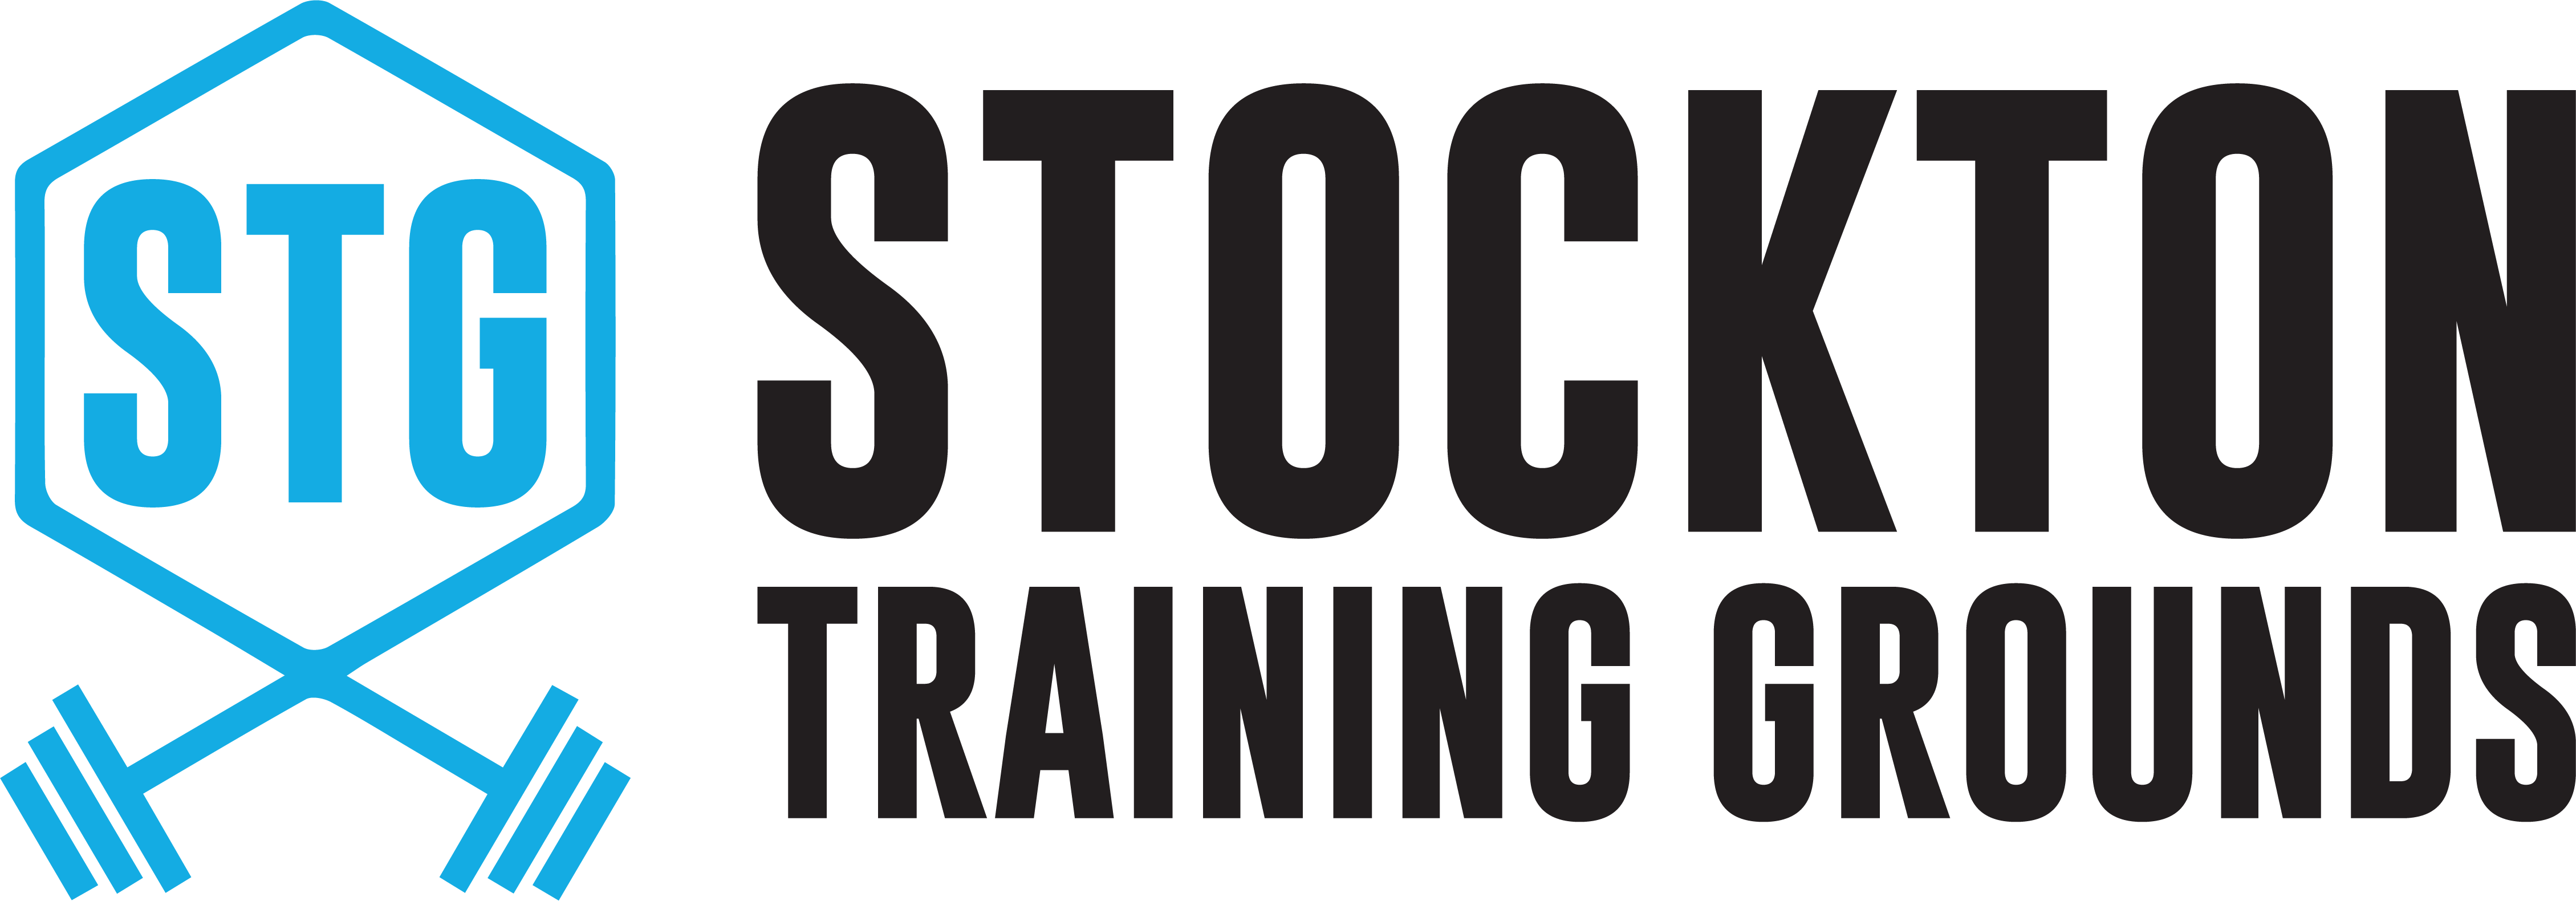 Stockton Training Grounds